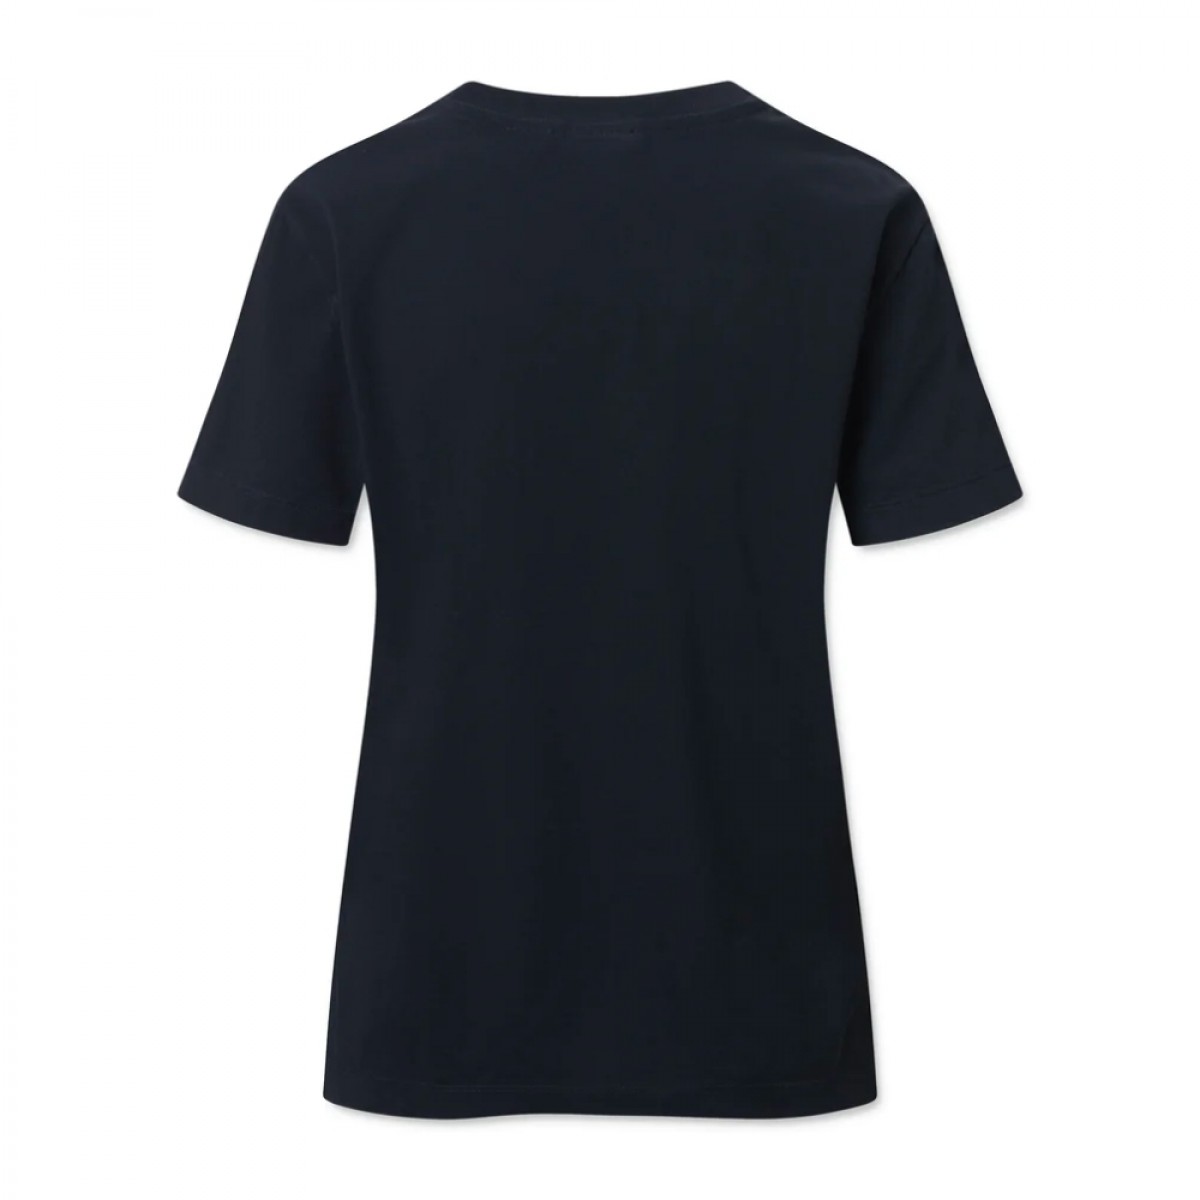 donna t-shirt - black - ryg